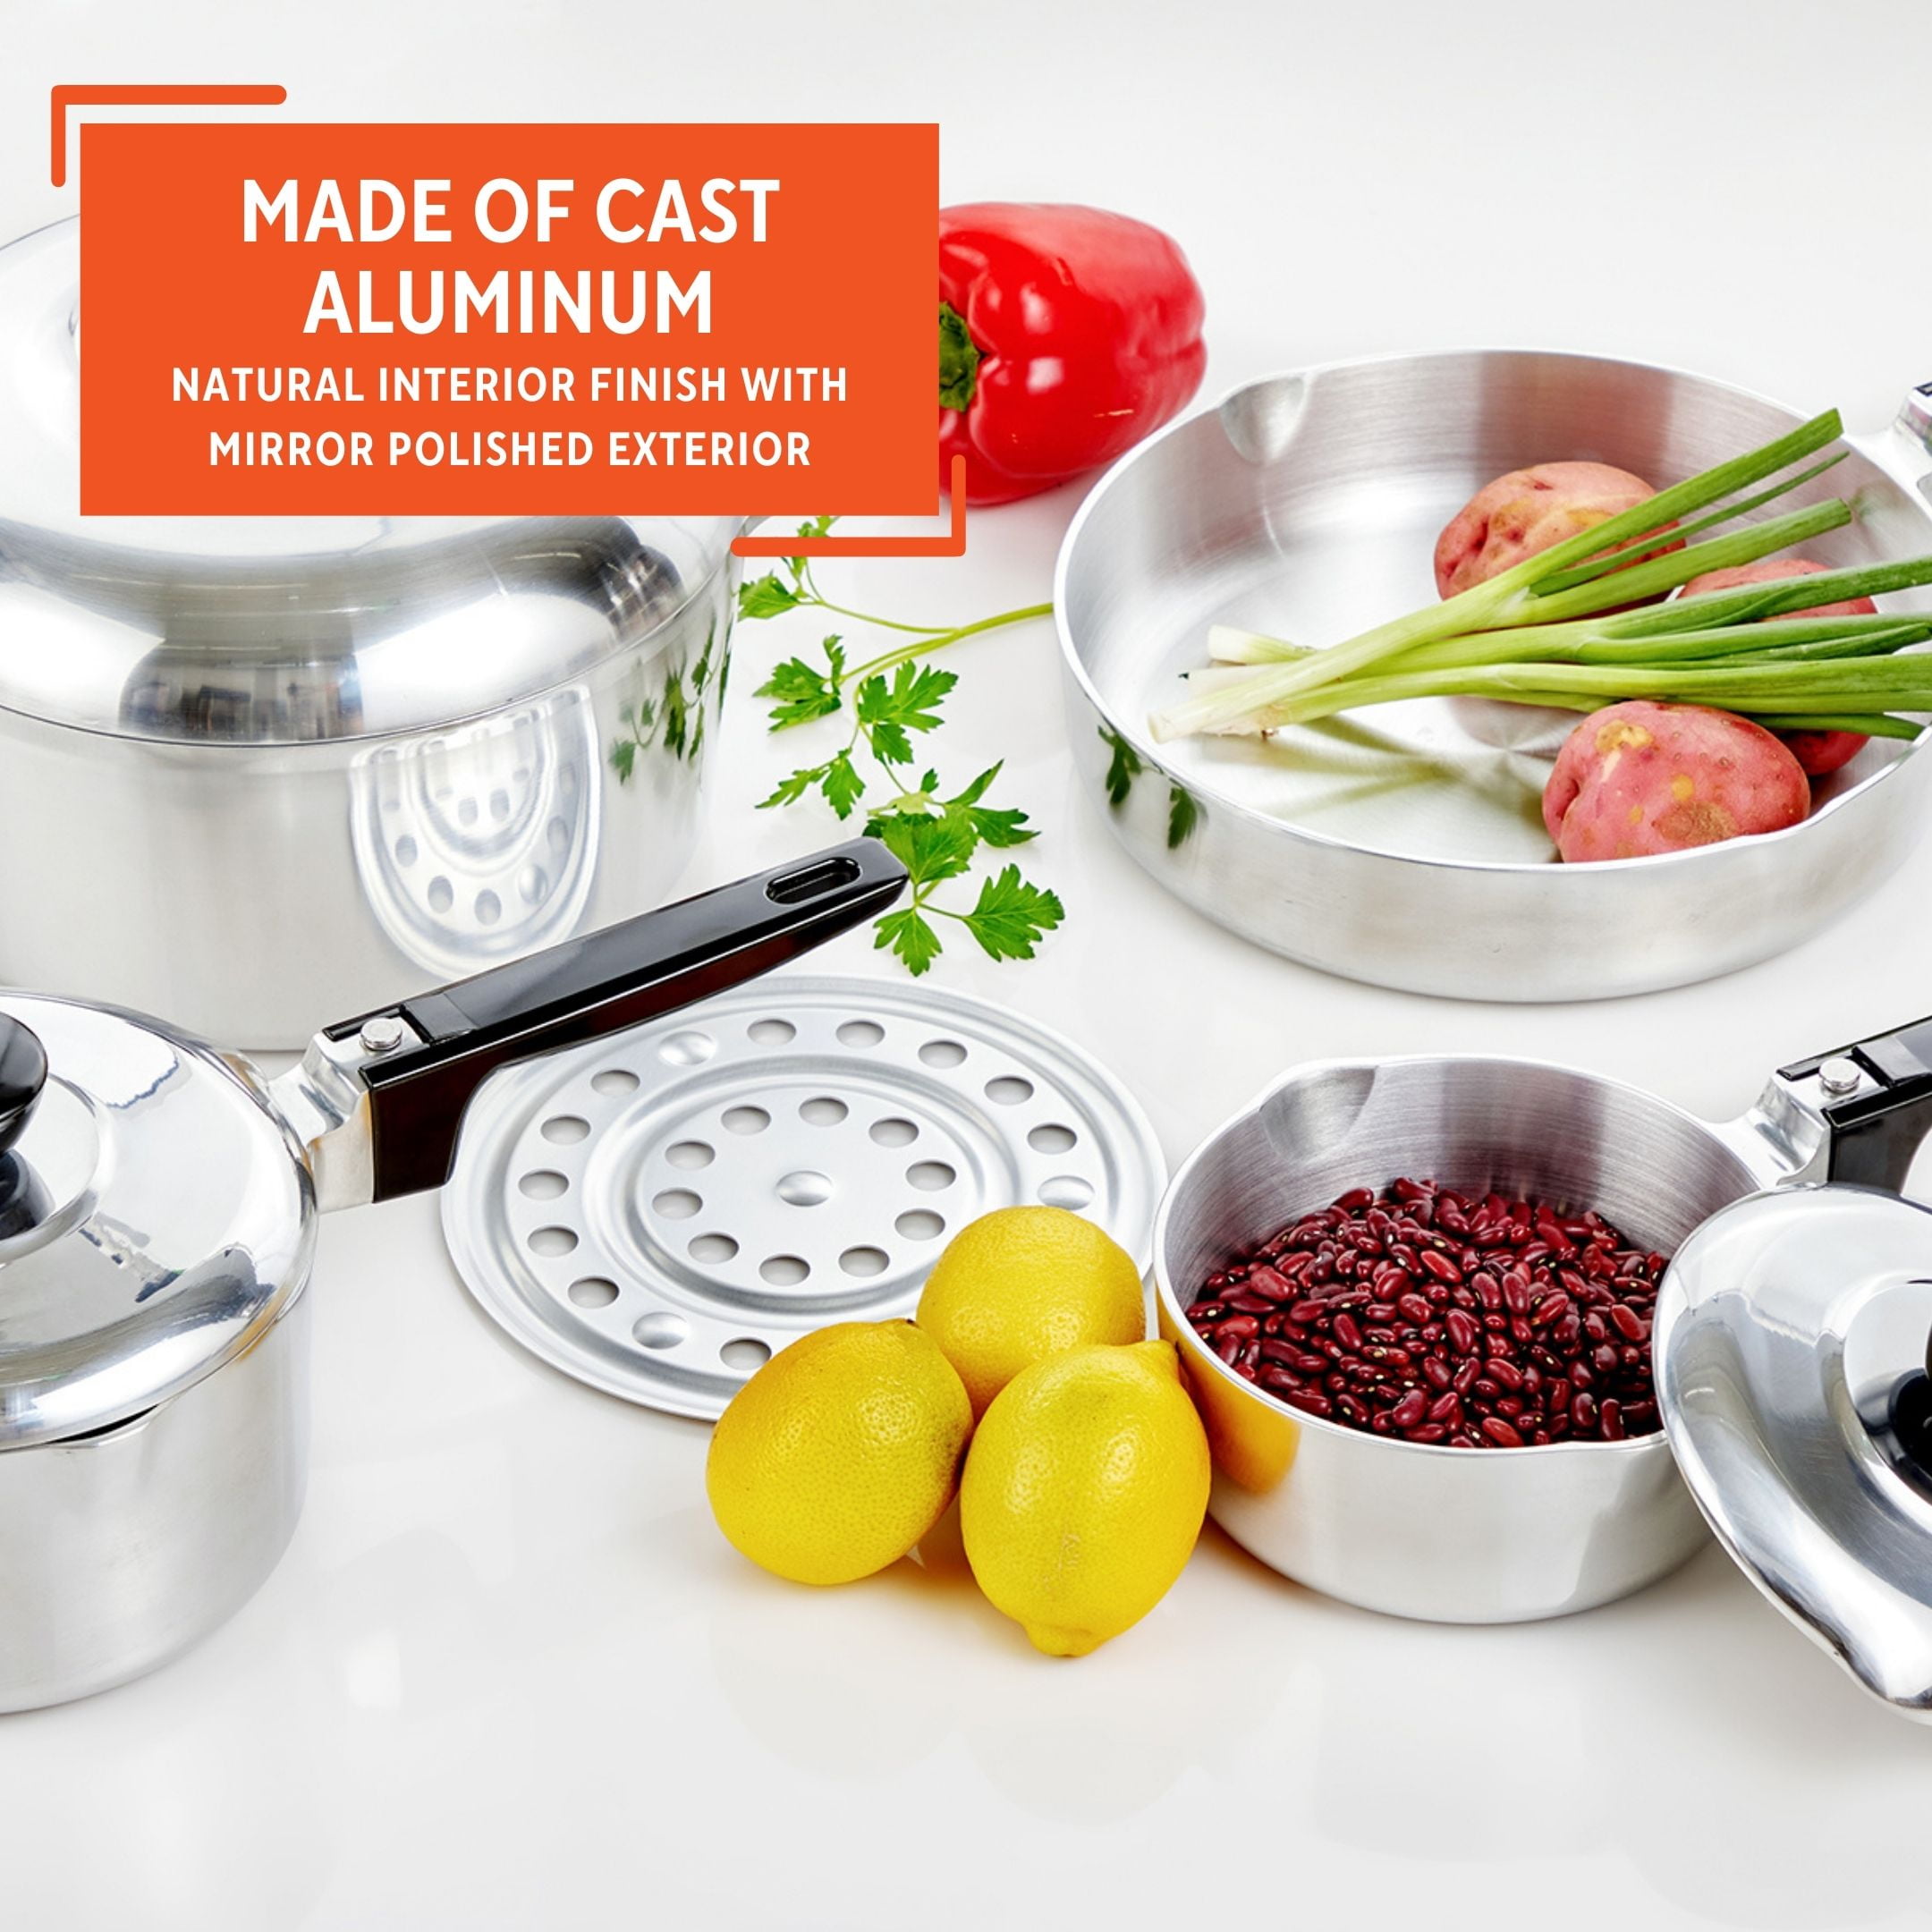  IMUSA USA Heavy Duty 13-Piece Cast Aluminum Cajun Cookware Set,  Silver: Home & Kitchen